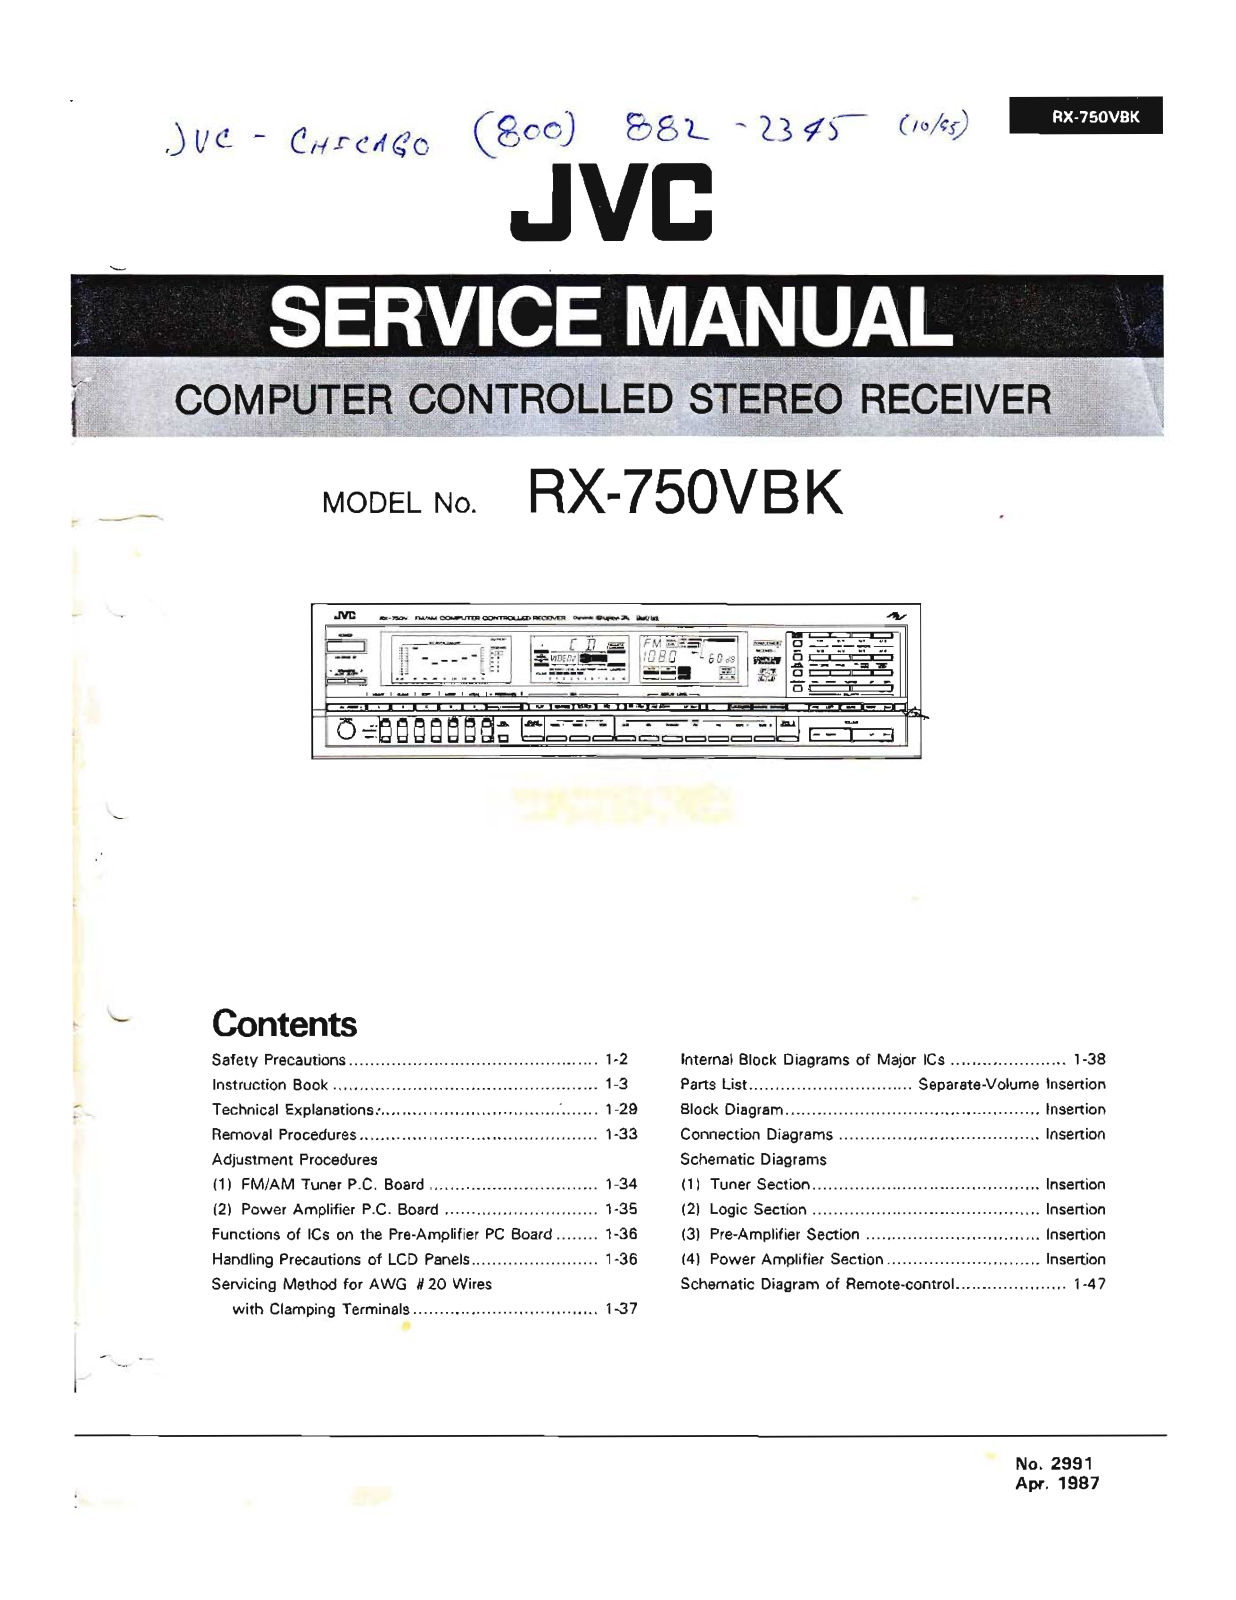 Jvc RX-750-VBK Service Manual